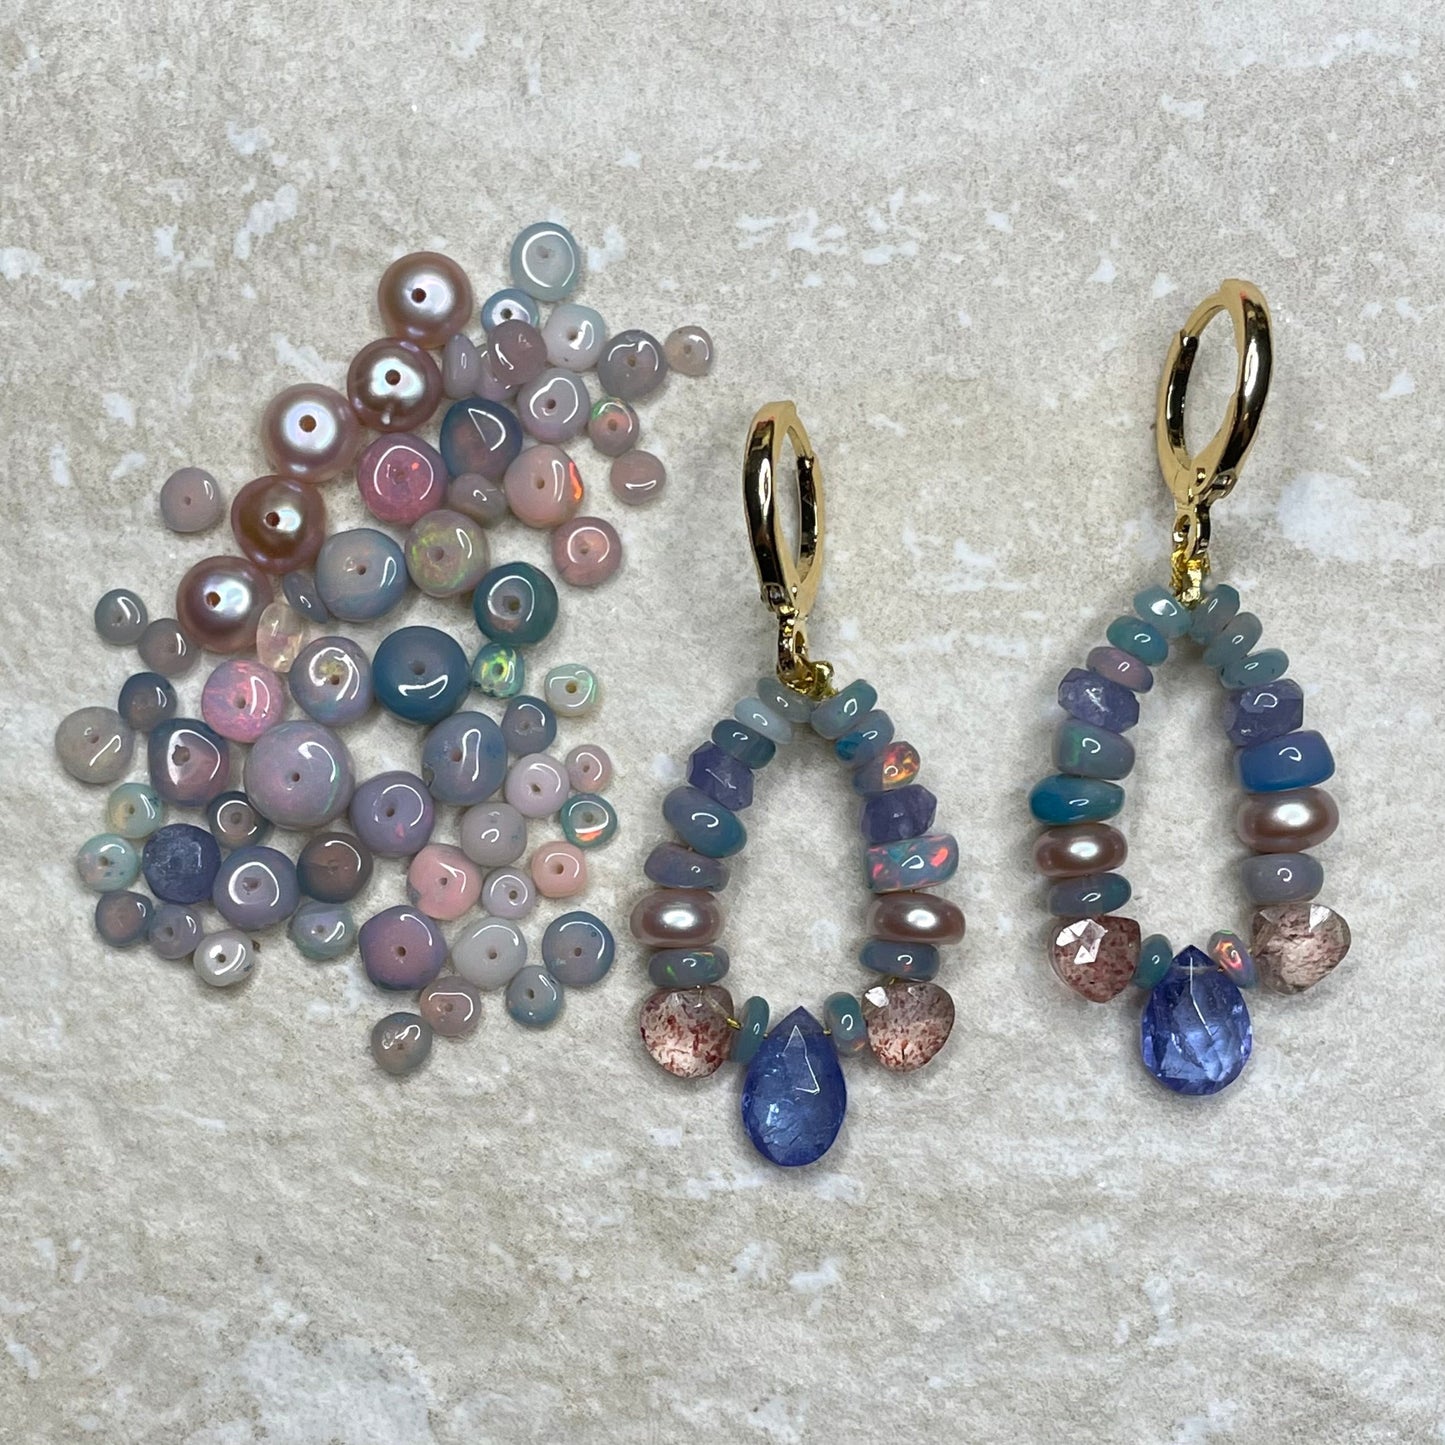 'Delphine' Opal, Tanzanite and Pearl Earrings